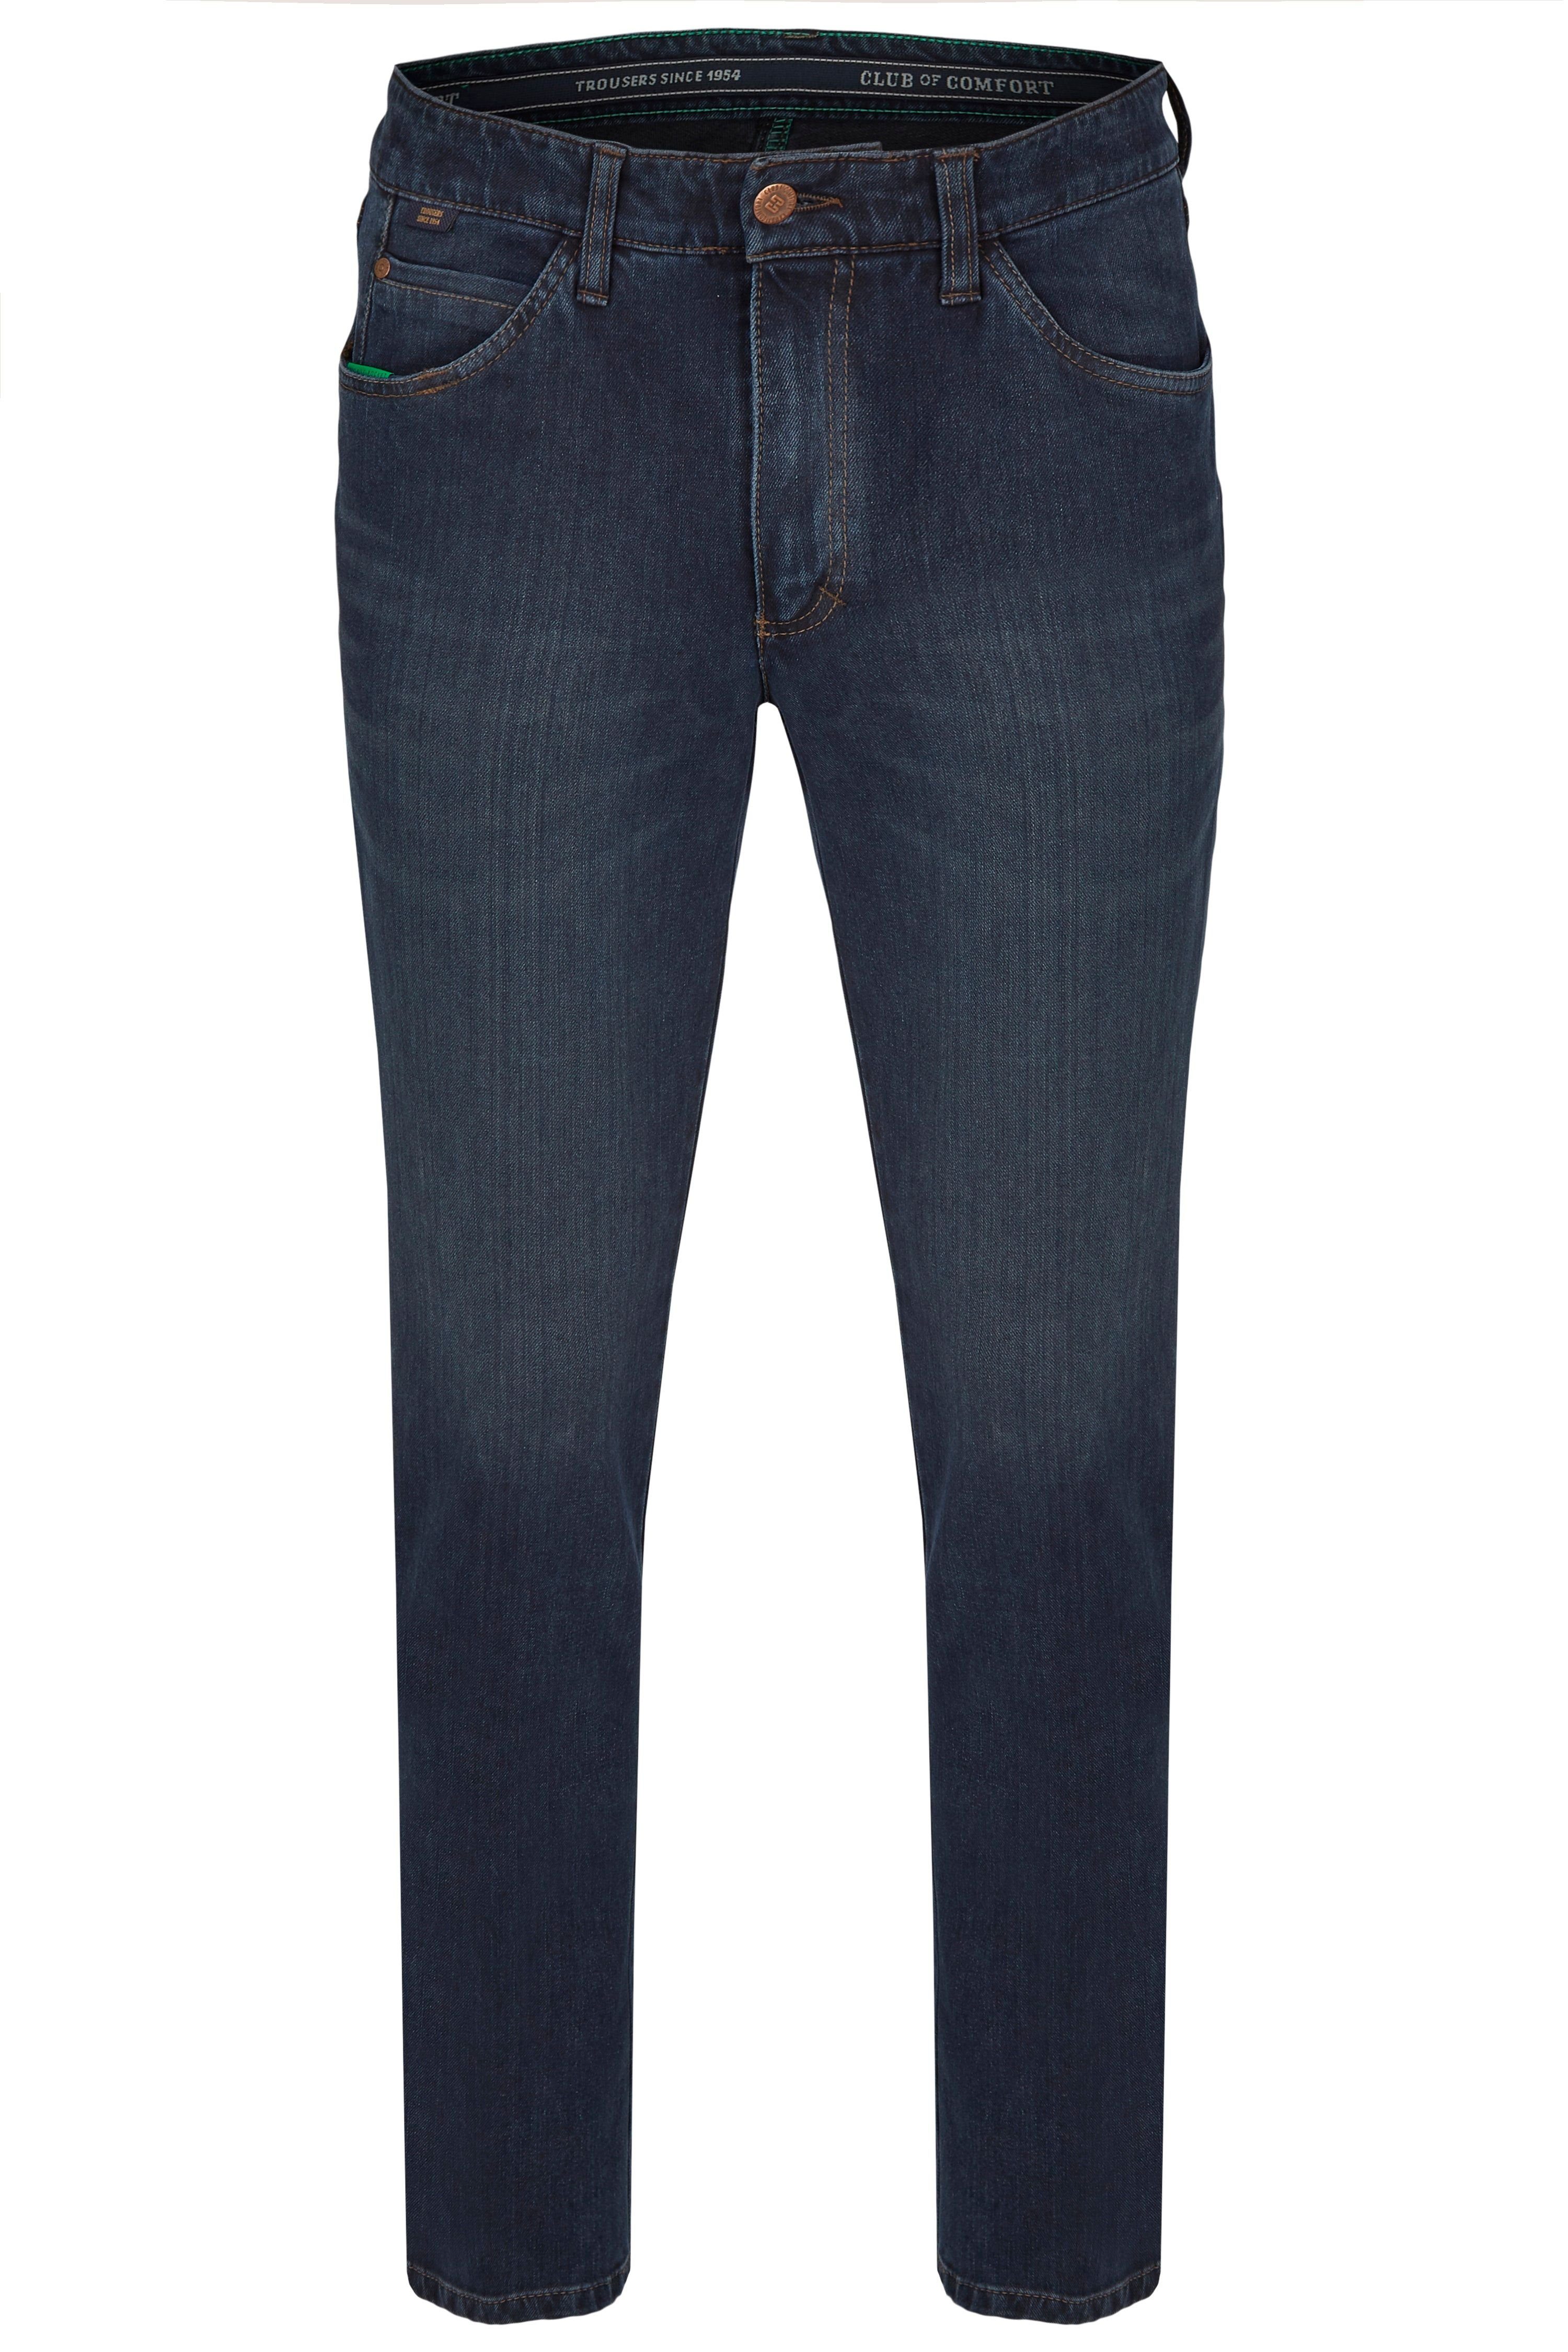 Club of Comfort 5-Pocket-Jeans blau